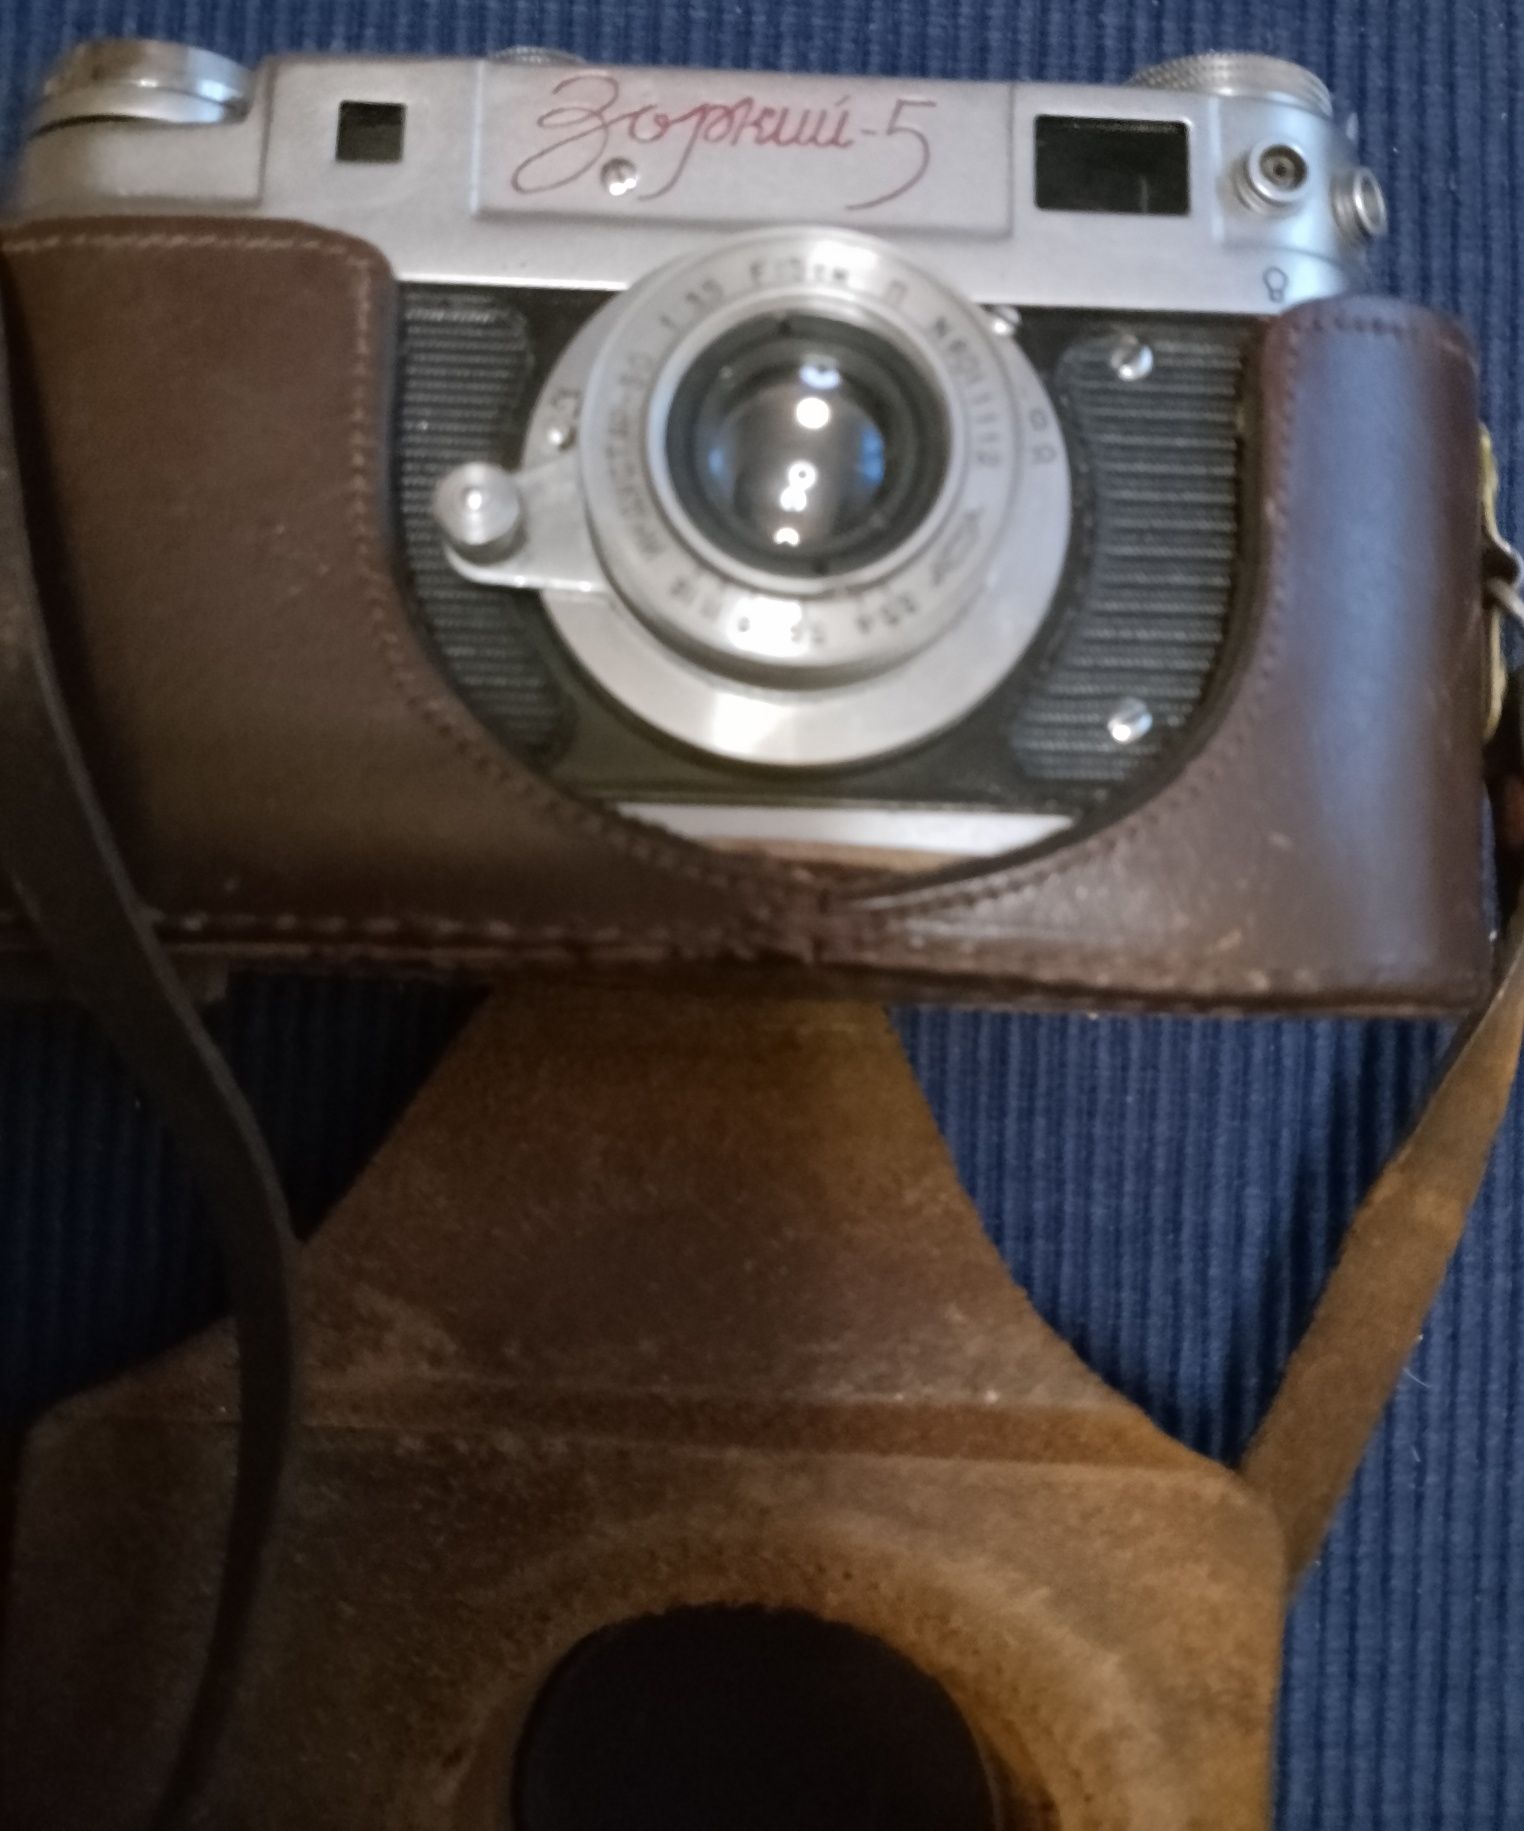 Aparat fotograficzny Zorka-5 analog